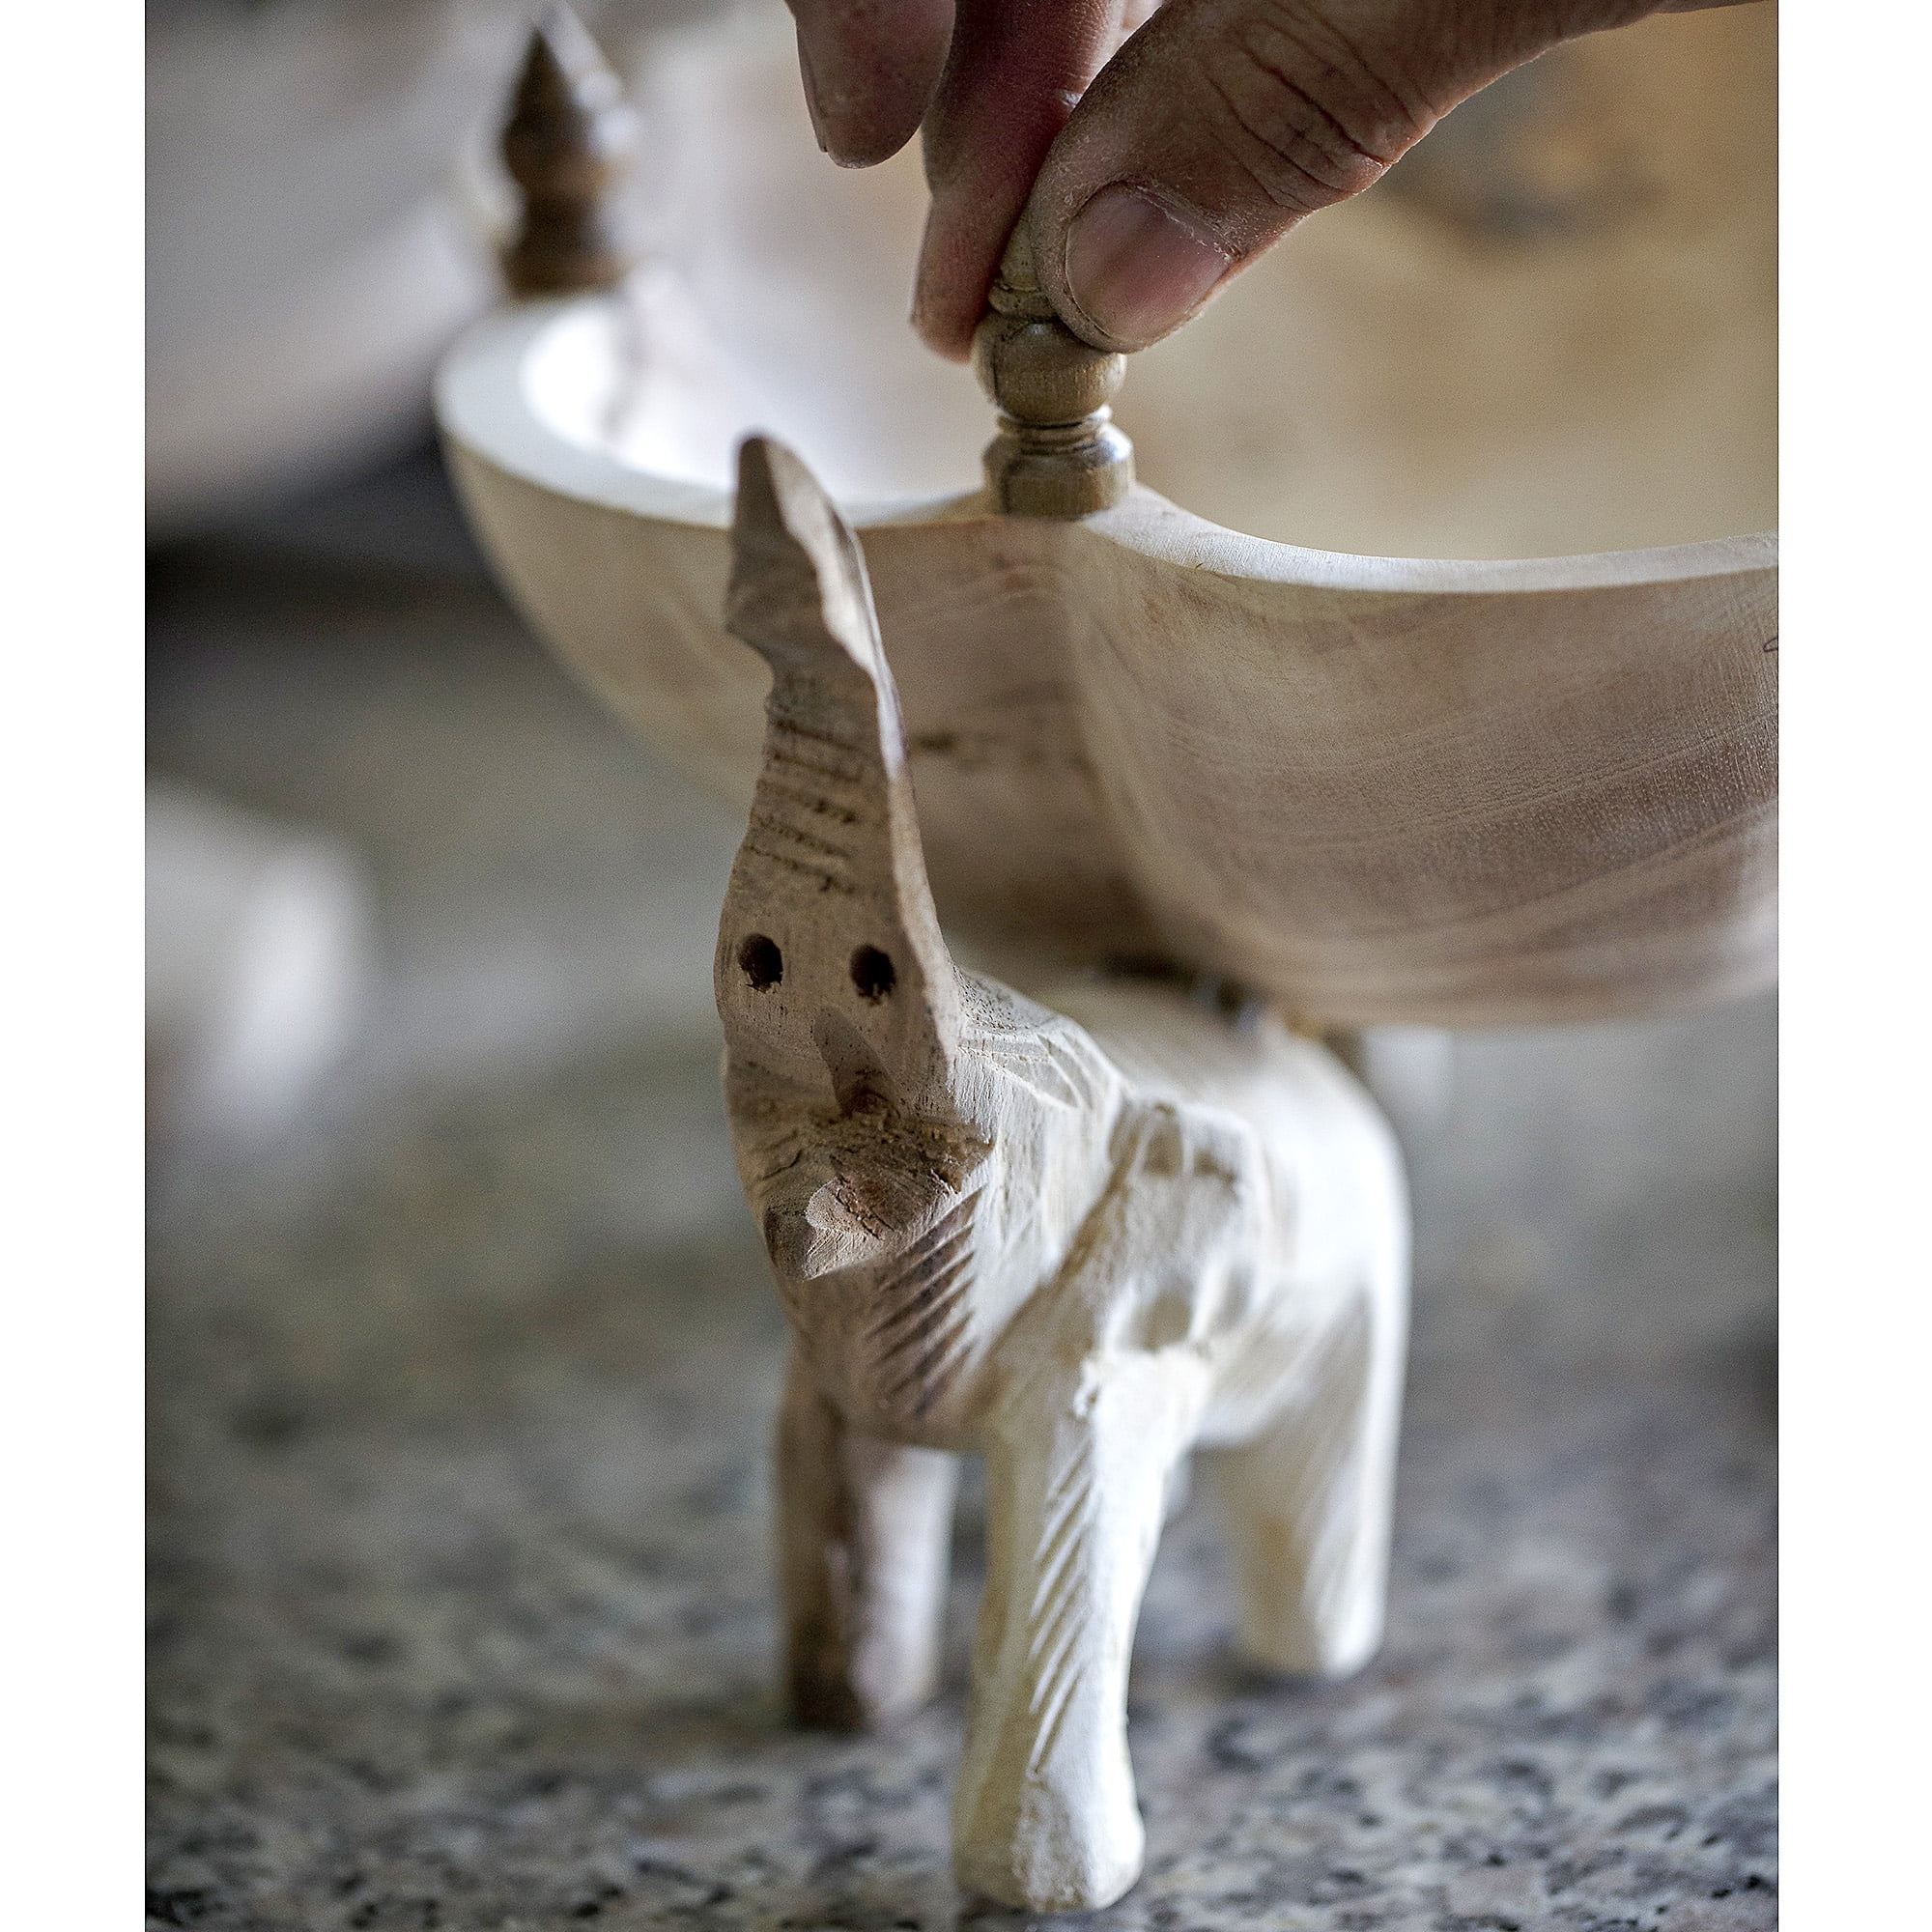 AeraVida 8 inches Triumphant Elephants Carved Rain Tree Wooden Bowl Fair Trade Handicraft HW-0001-BRN 